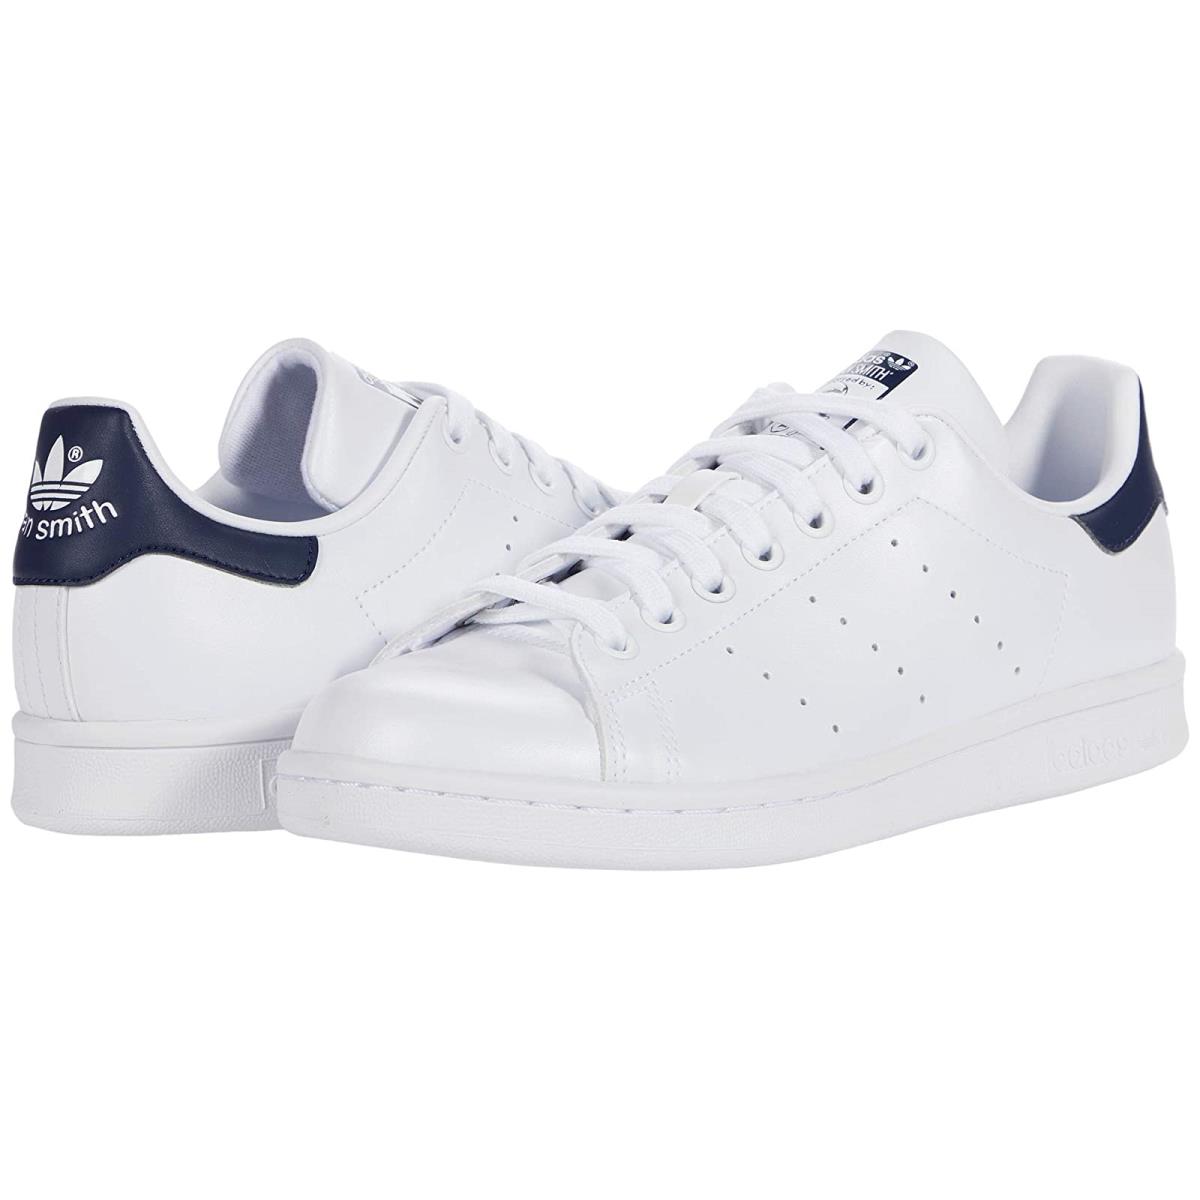 Woman`s Sneakers Athletic Shoes Adidas Originals Stan Smith Footwear White/Collegiate Navy/Footwear White